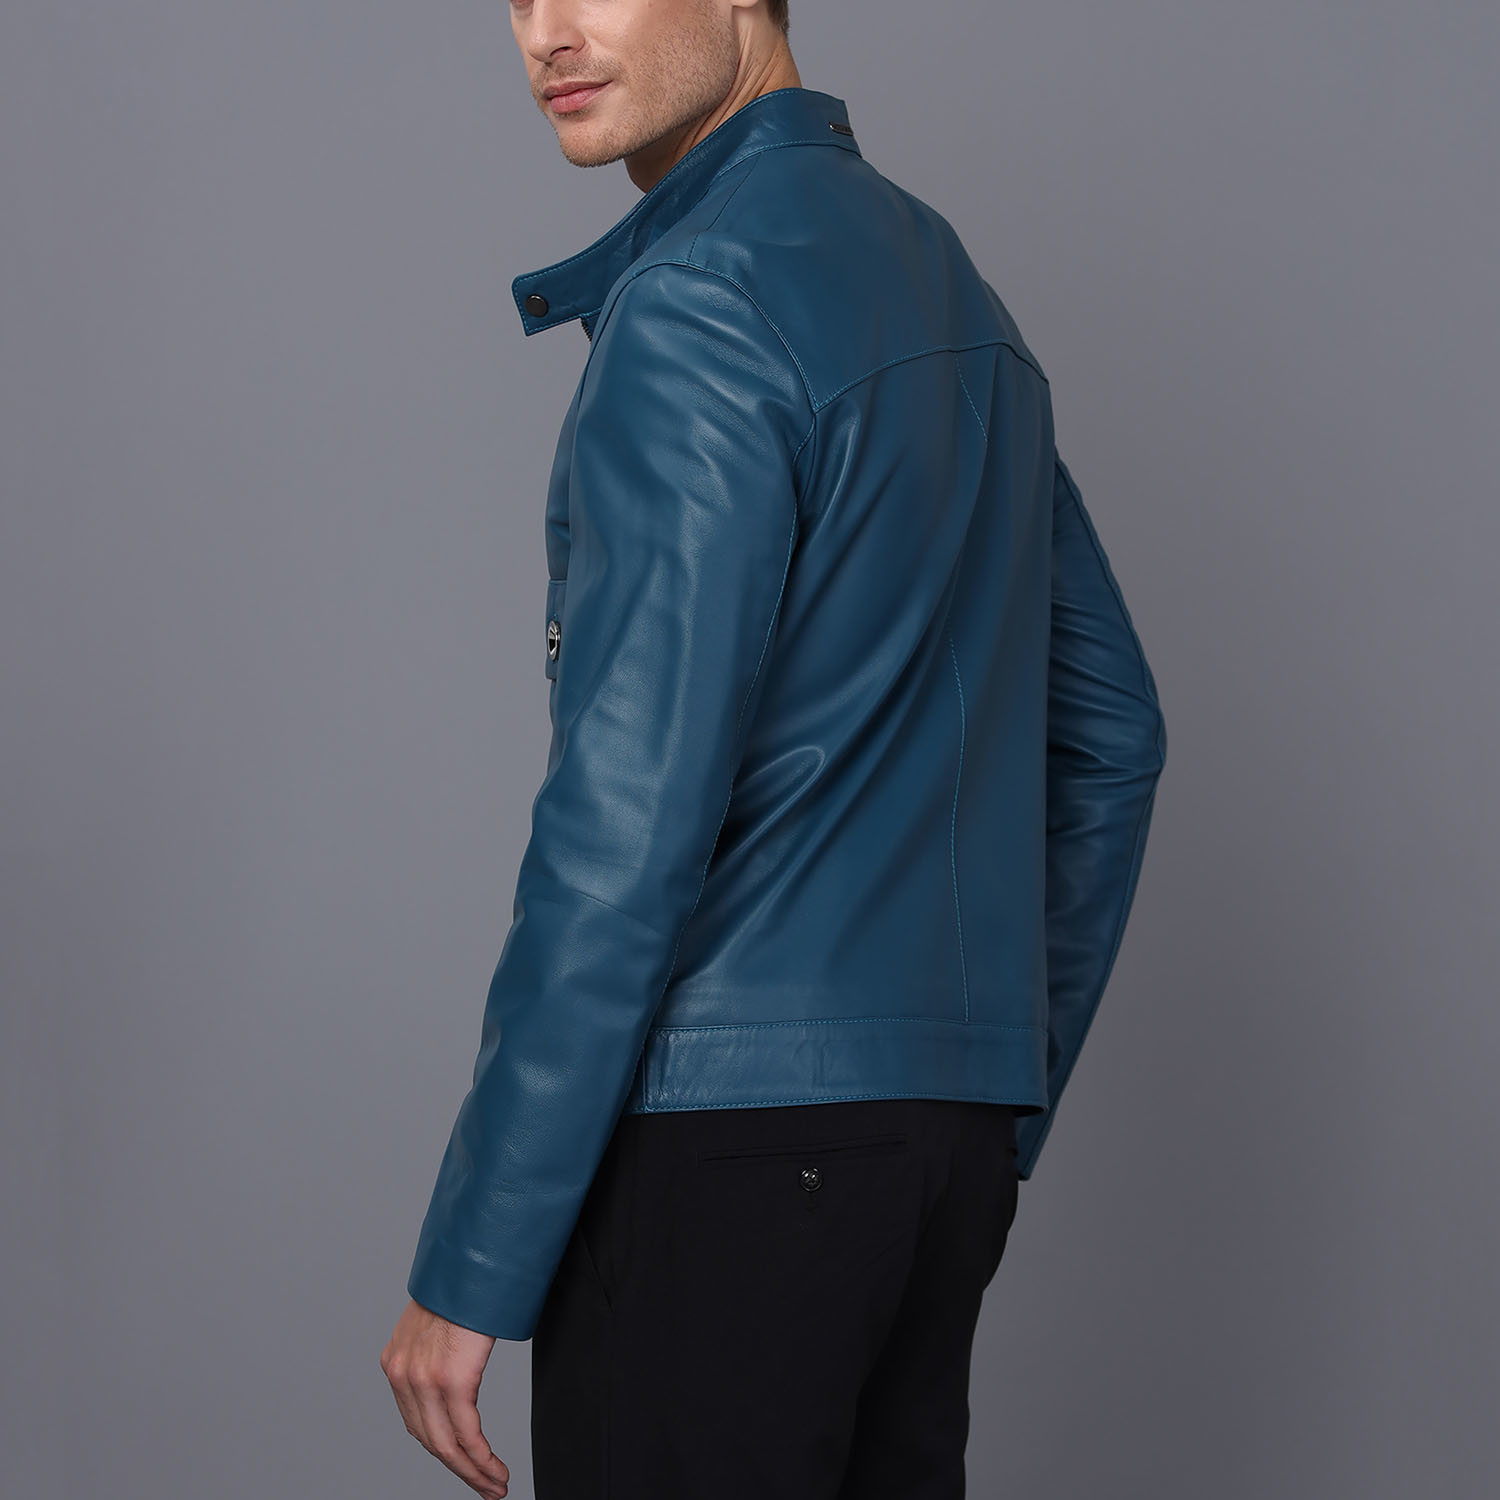 Turin Leather Jacket // Oil Blue (M) - Basics&More Leather Jackets ...